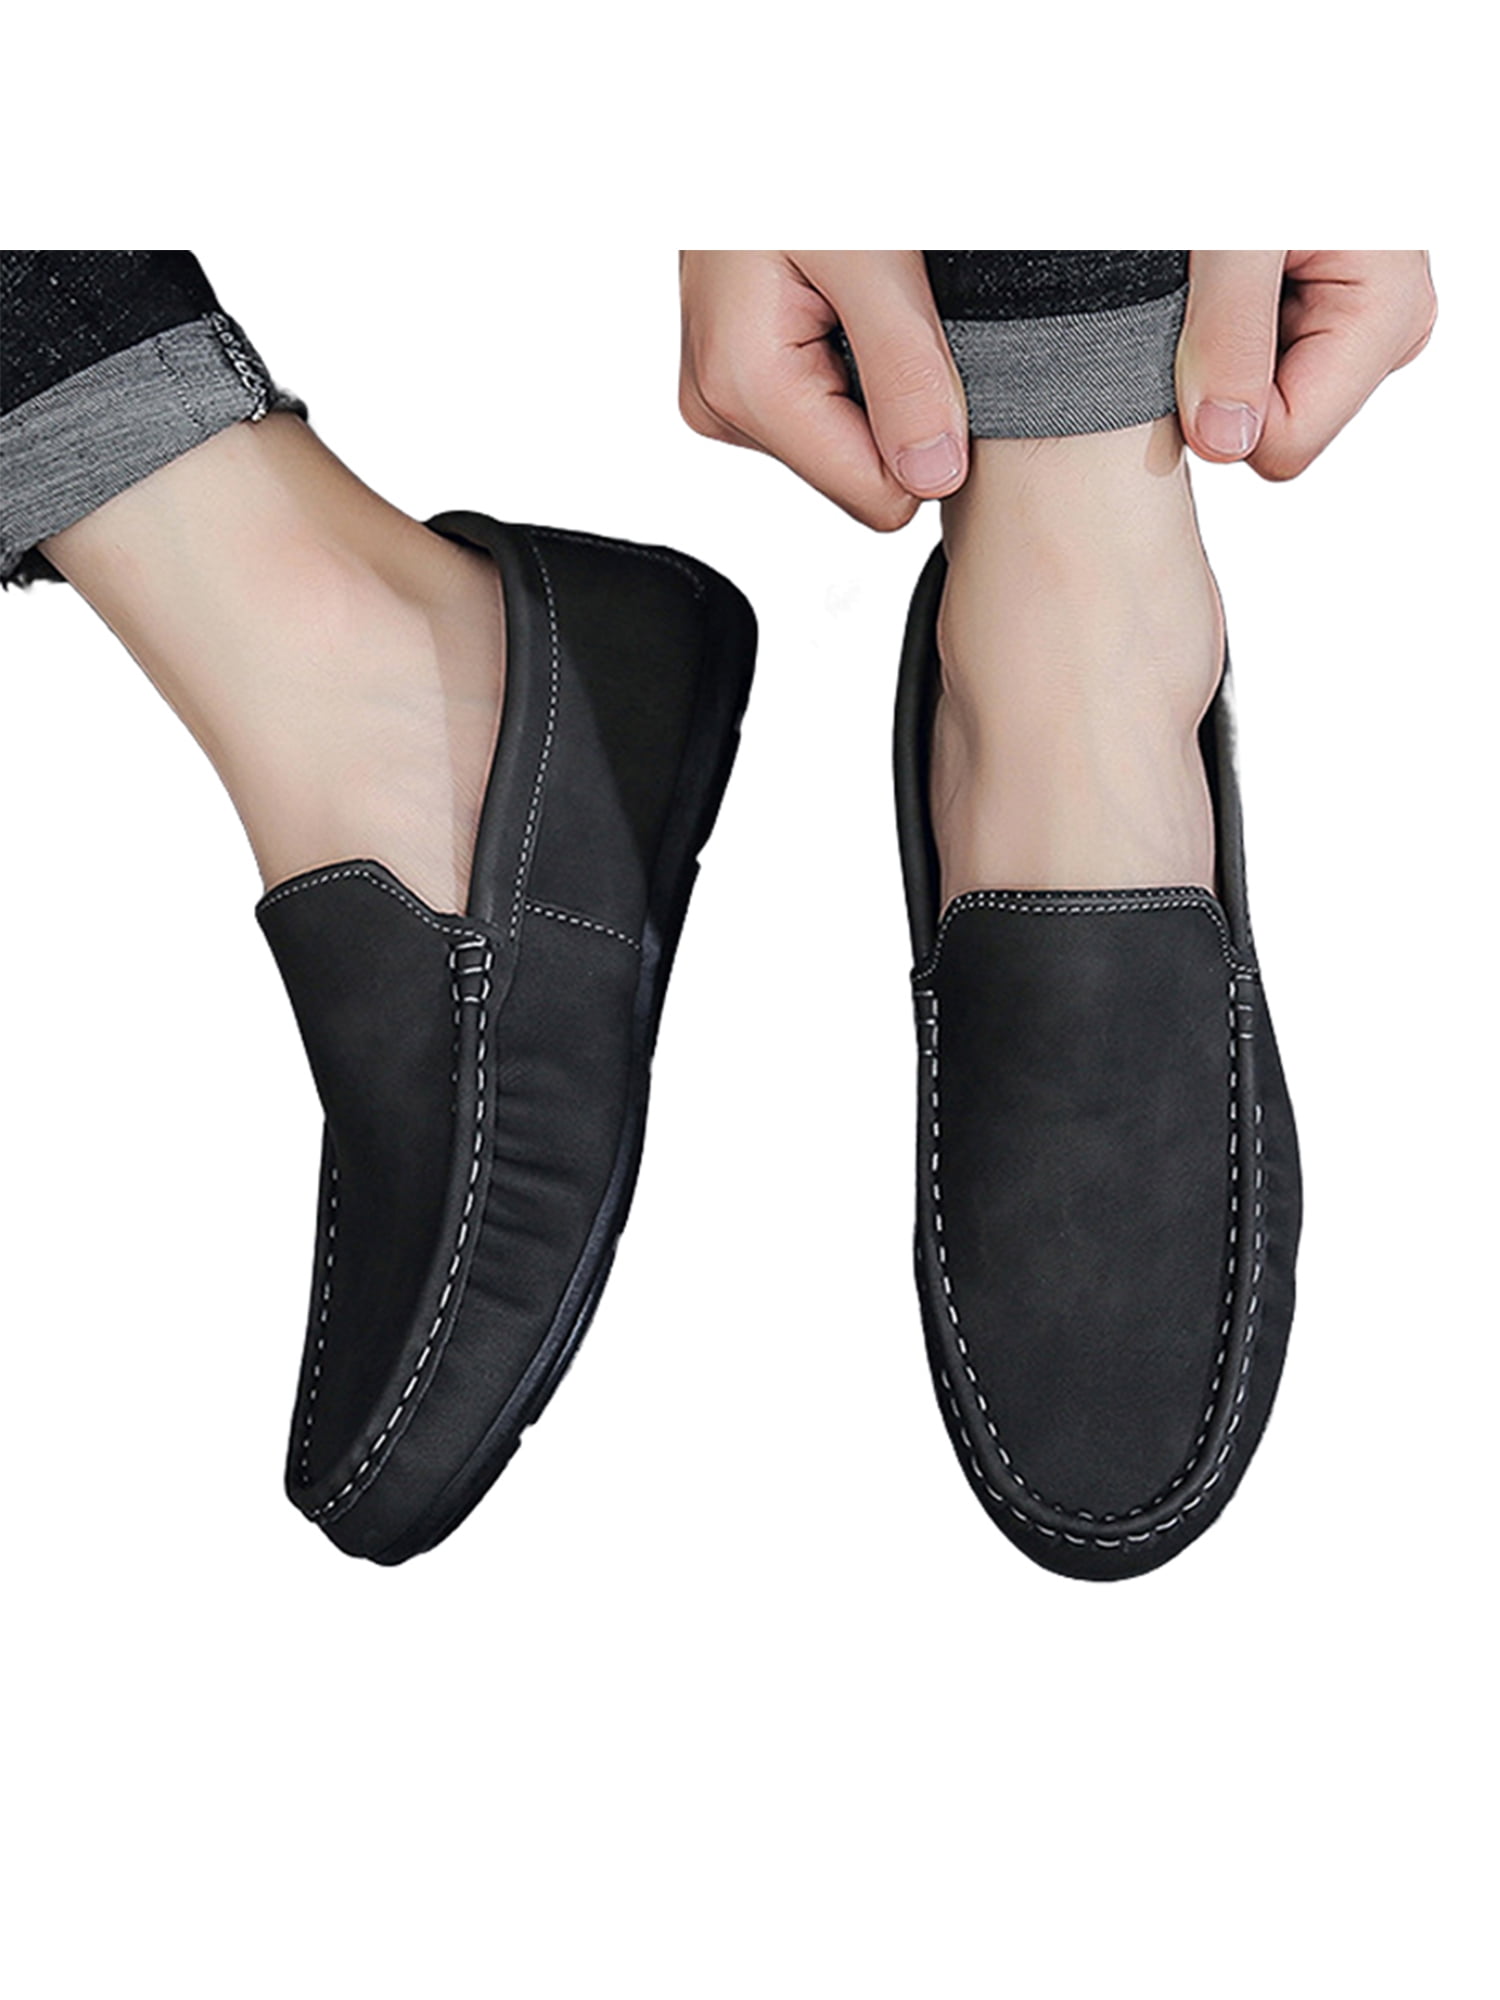 Camel Men Loafers Shoes Boat Footwear Leather Shoes @ Best Price Online |  Jumia Kenya